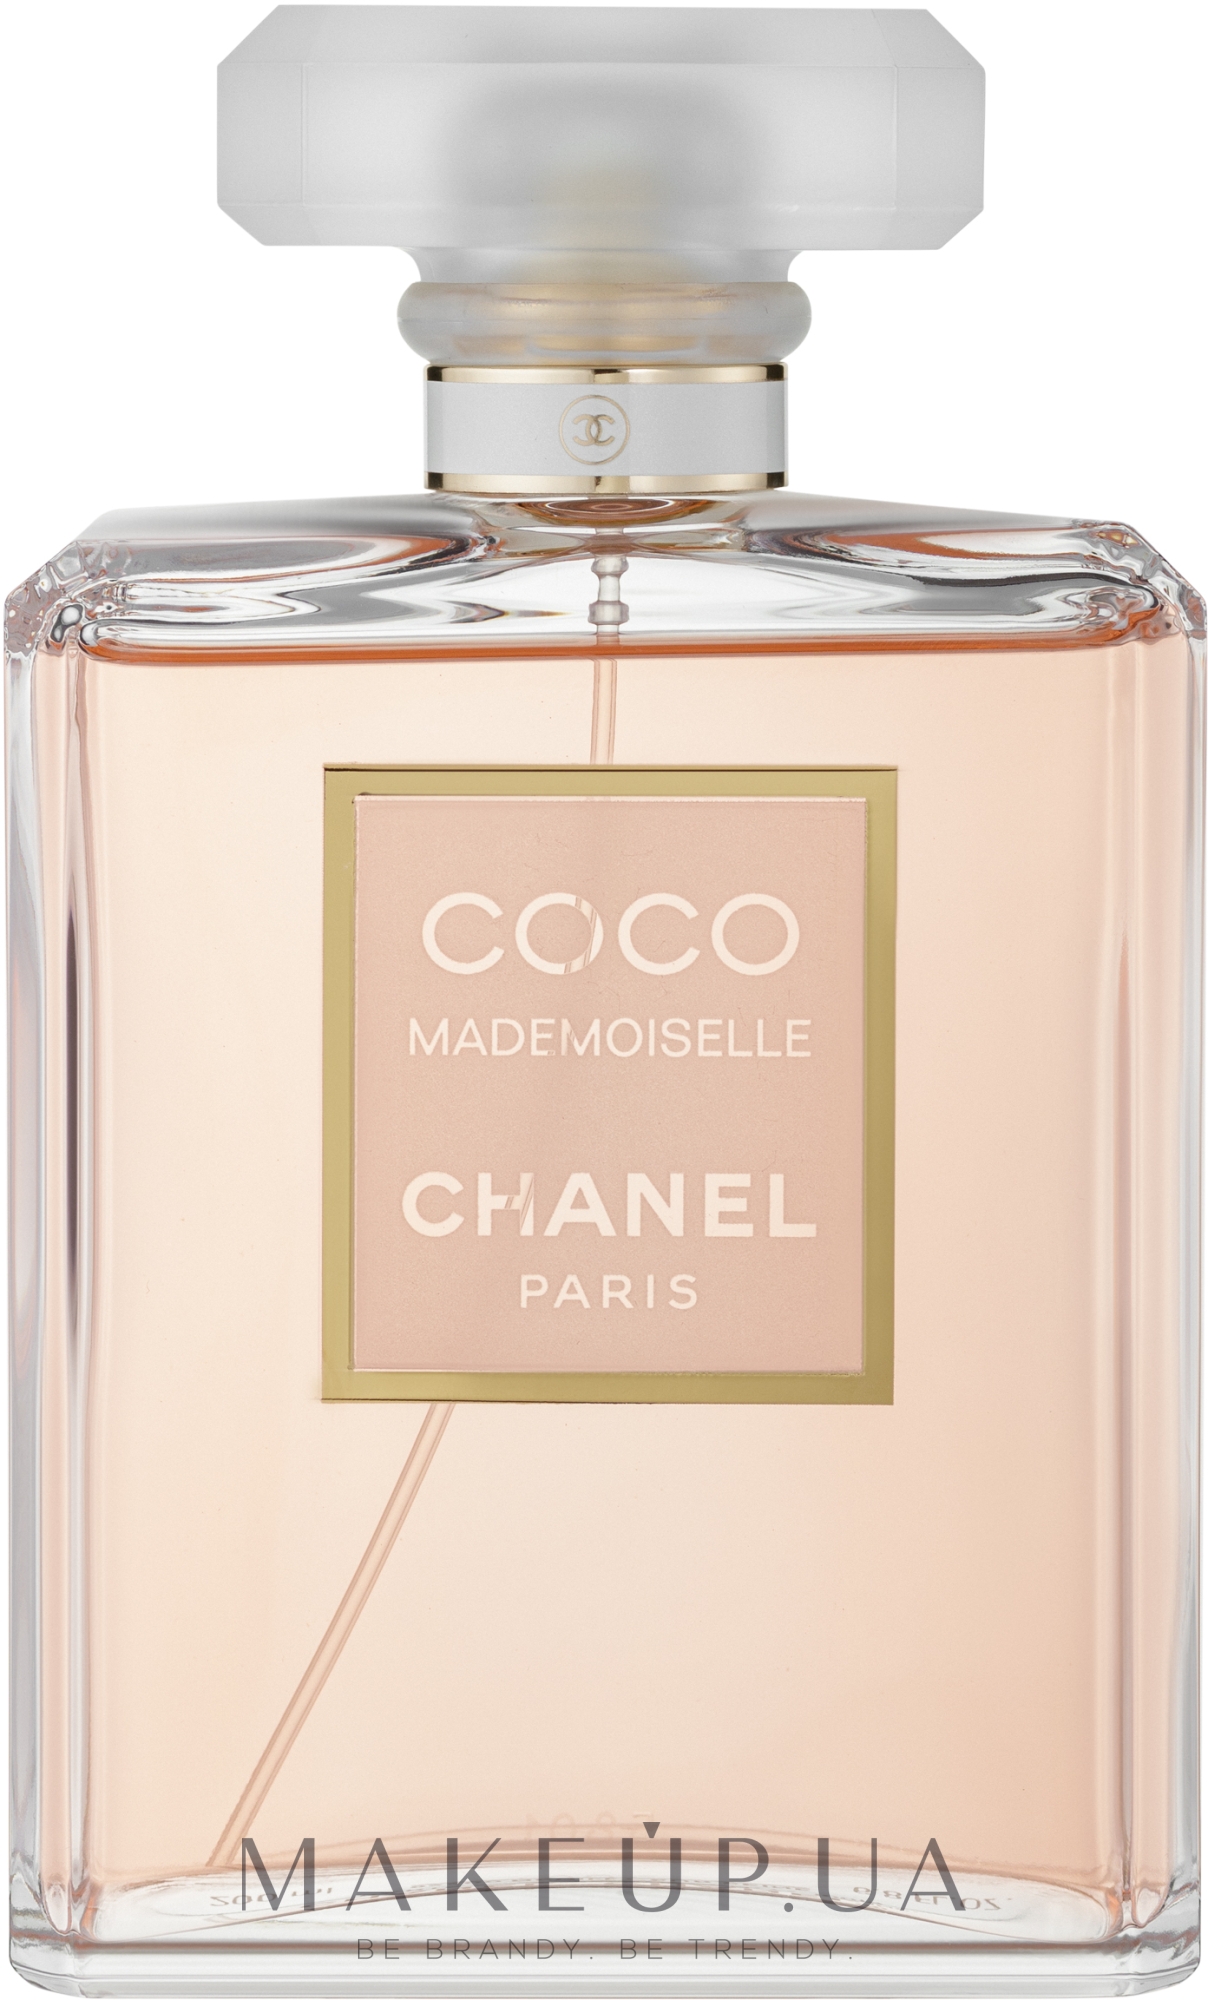 Chanel Coco Mademoiselle парфюмерная вода для женщин 50 мл  купить в Баку  Цена обзор отзывы продажа